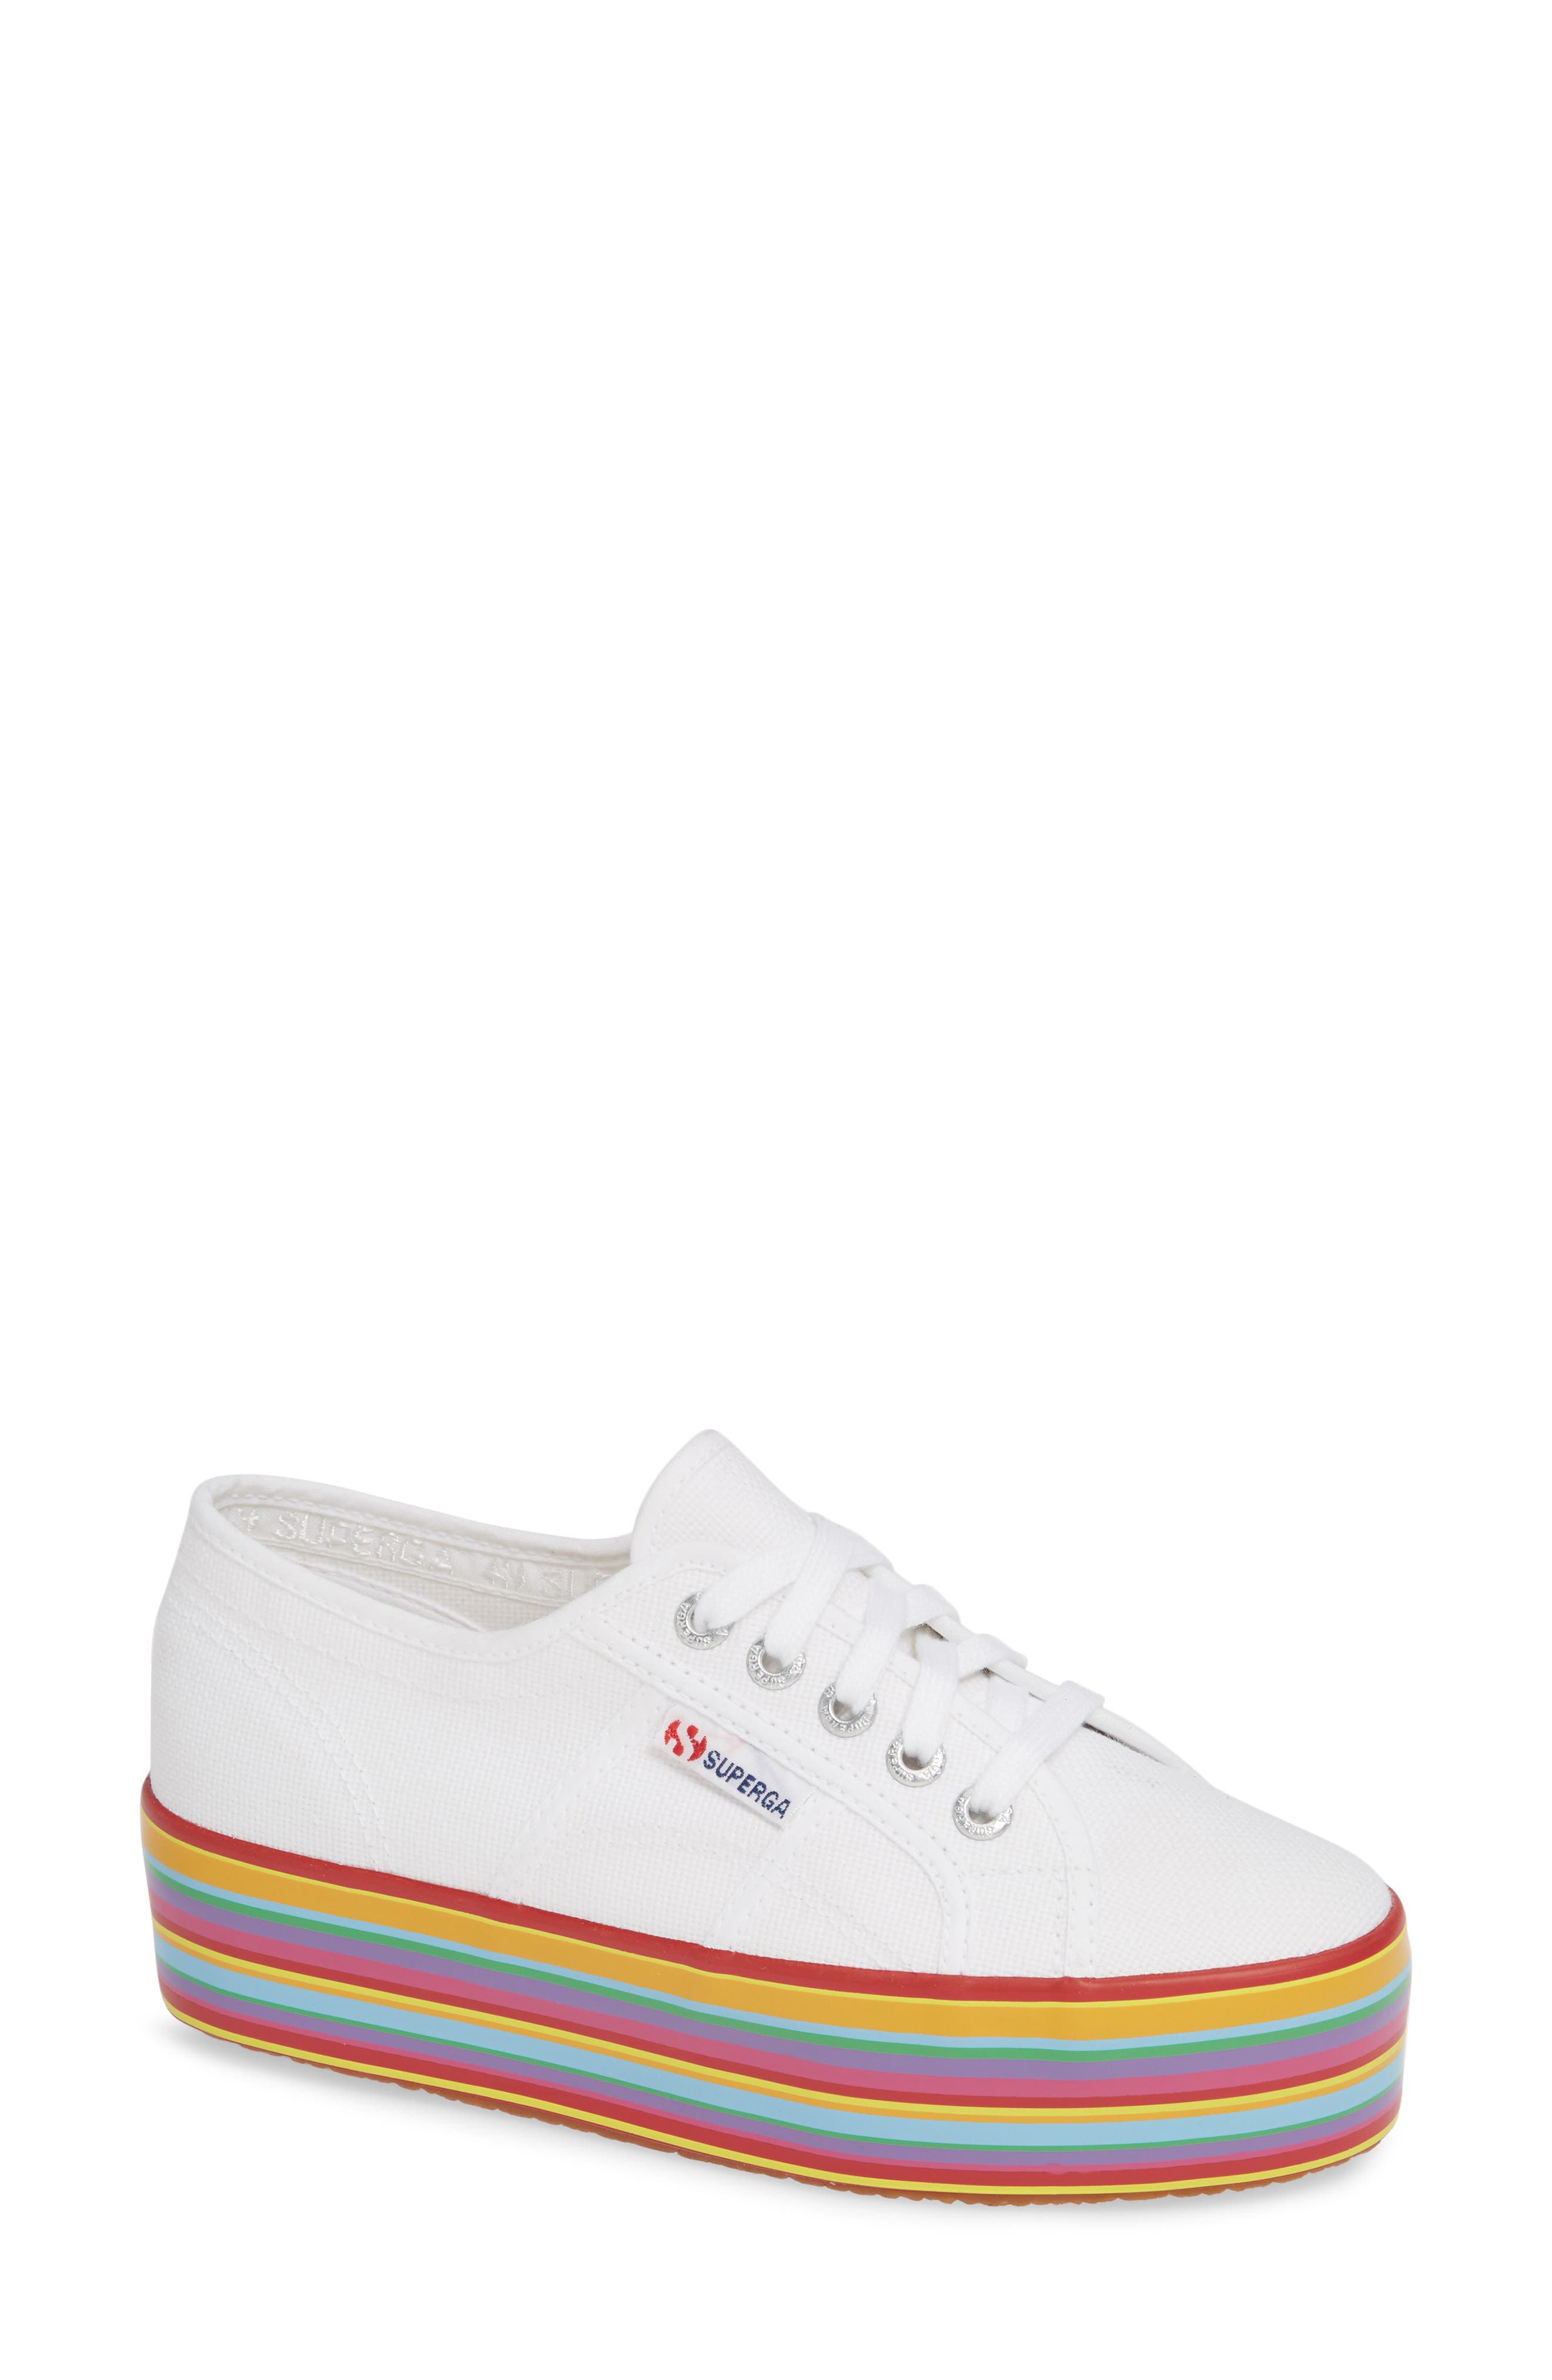 superga rainbow platform sneakers